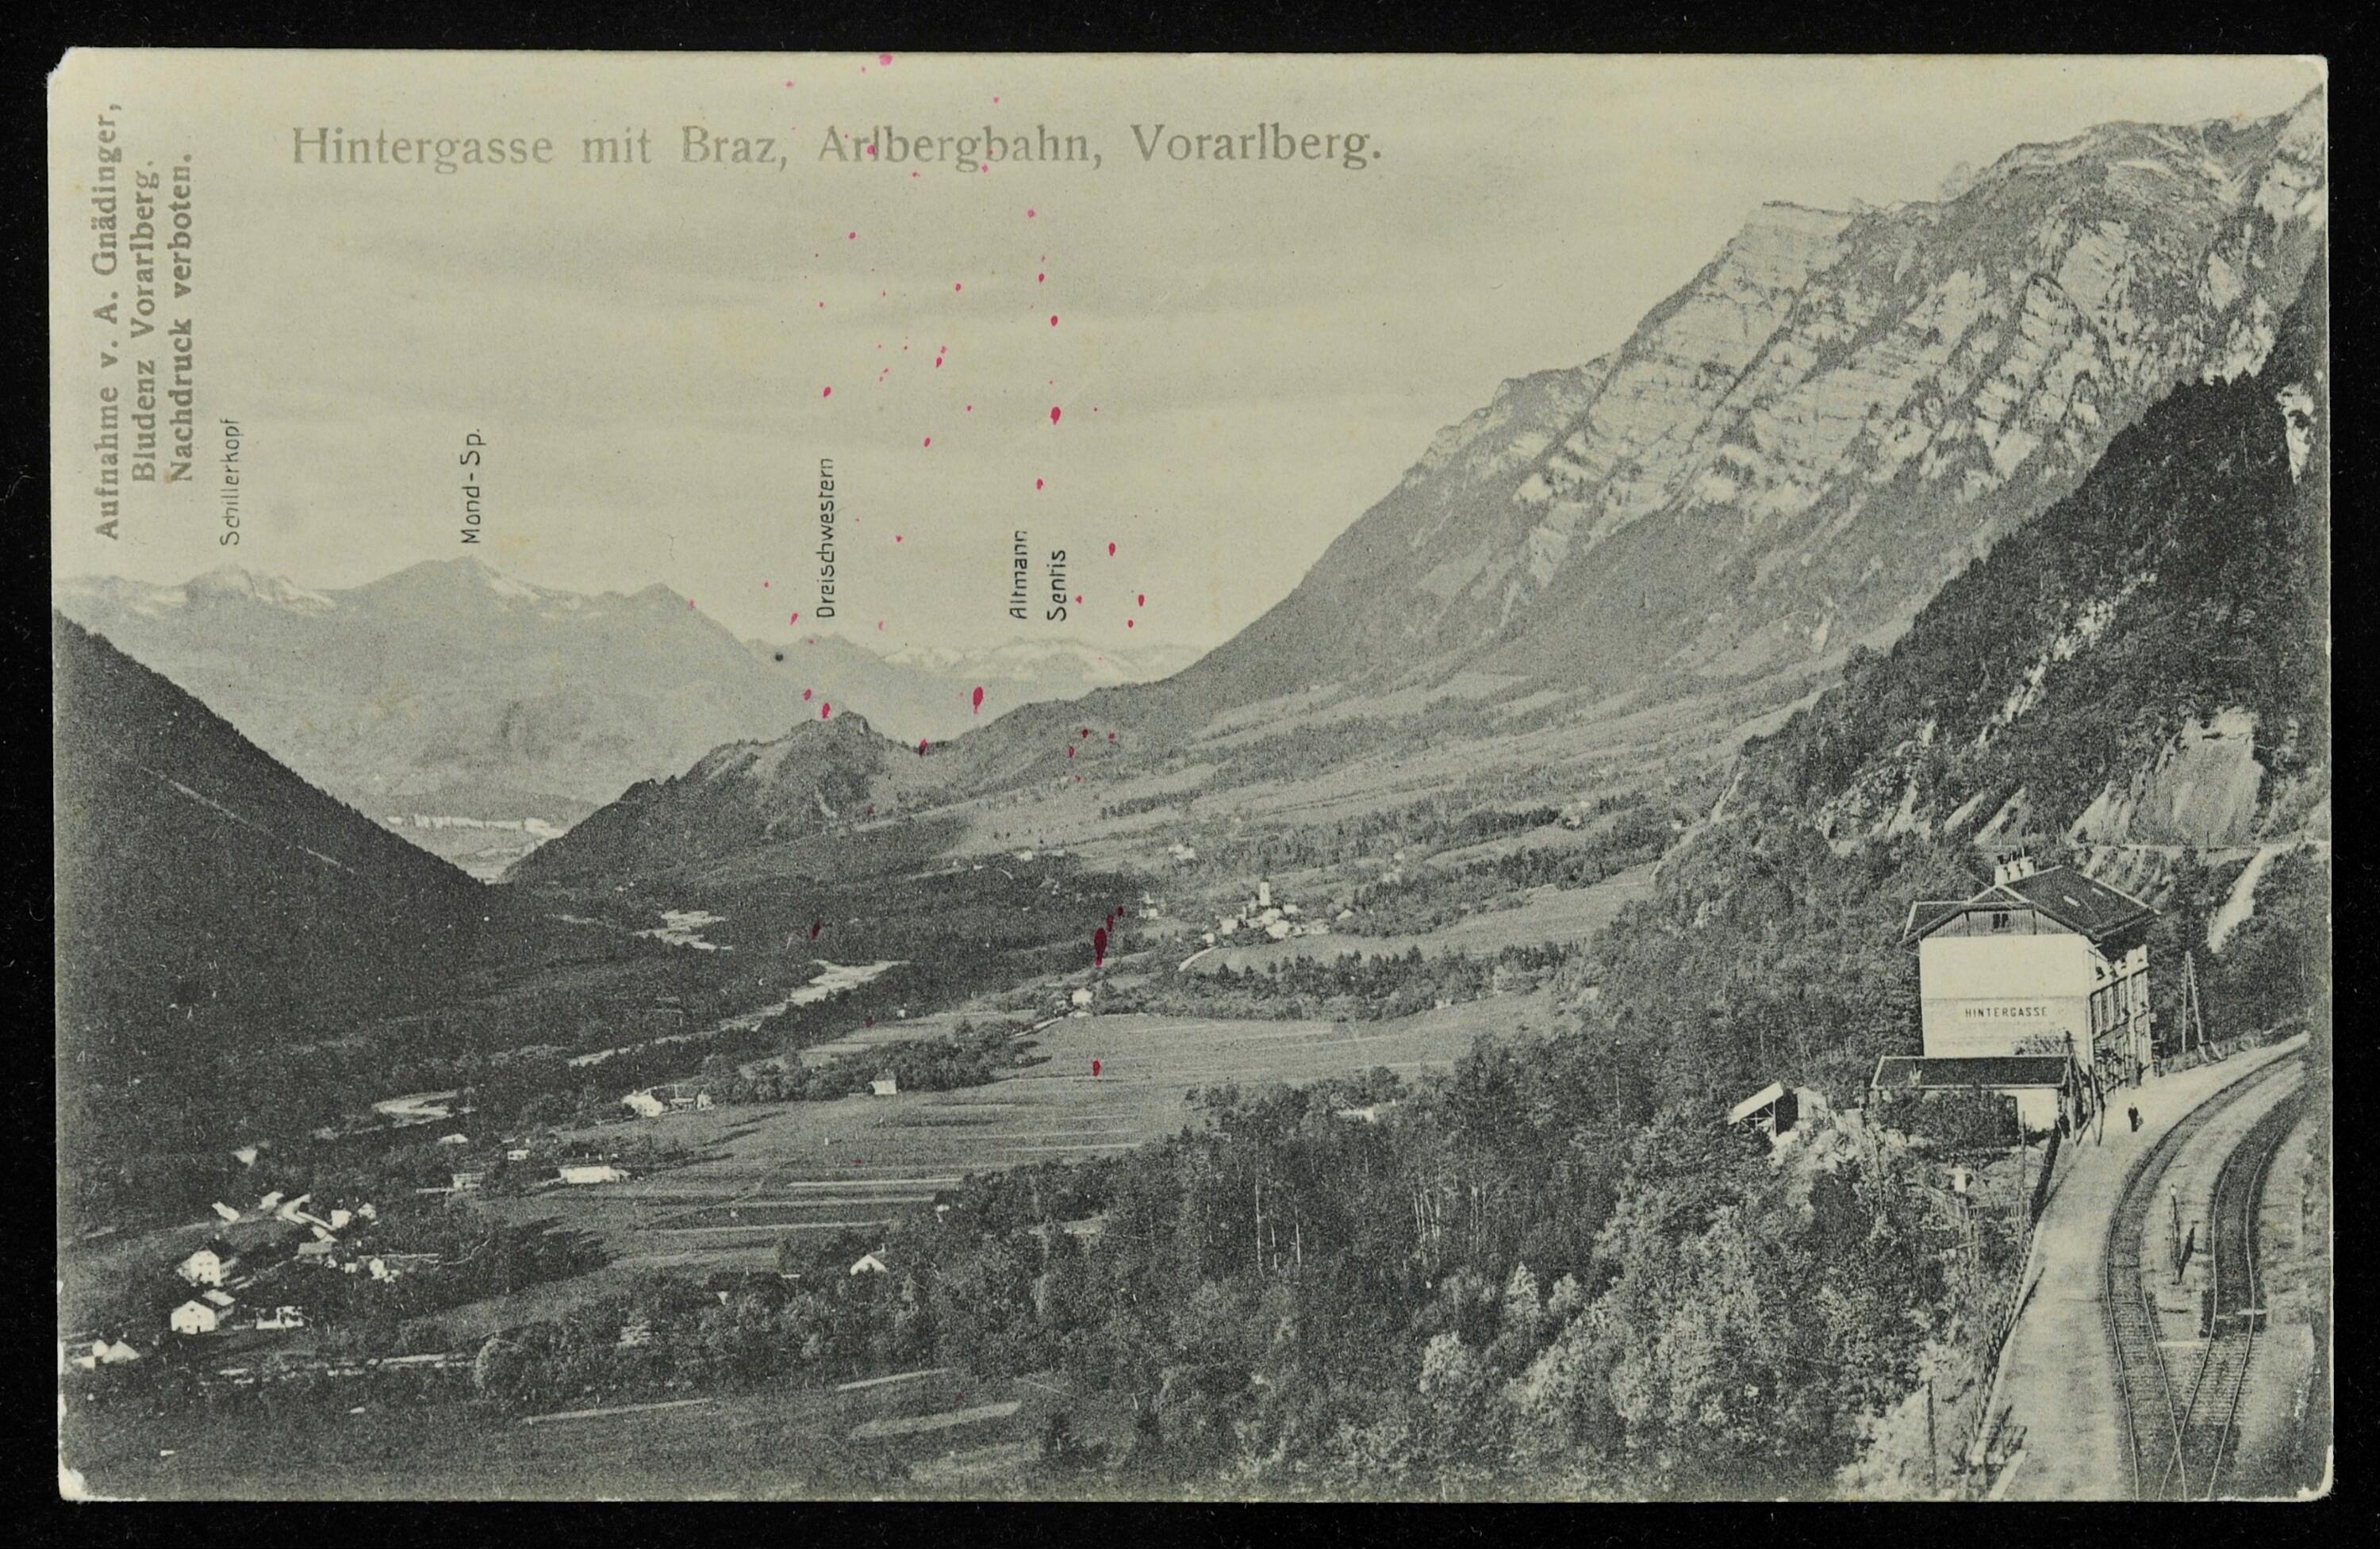 [Innerbraz] Hintergasse mit Braz, Arlbergbahn, Vorarlberg></div>


    <hr>
    <div class=